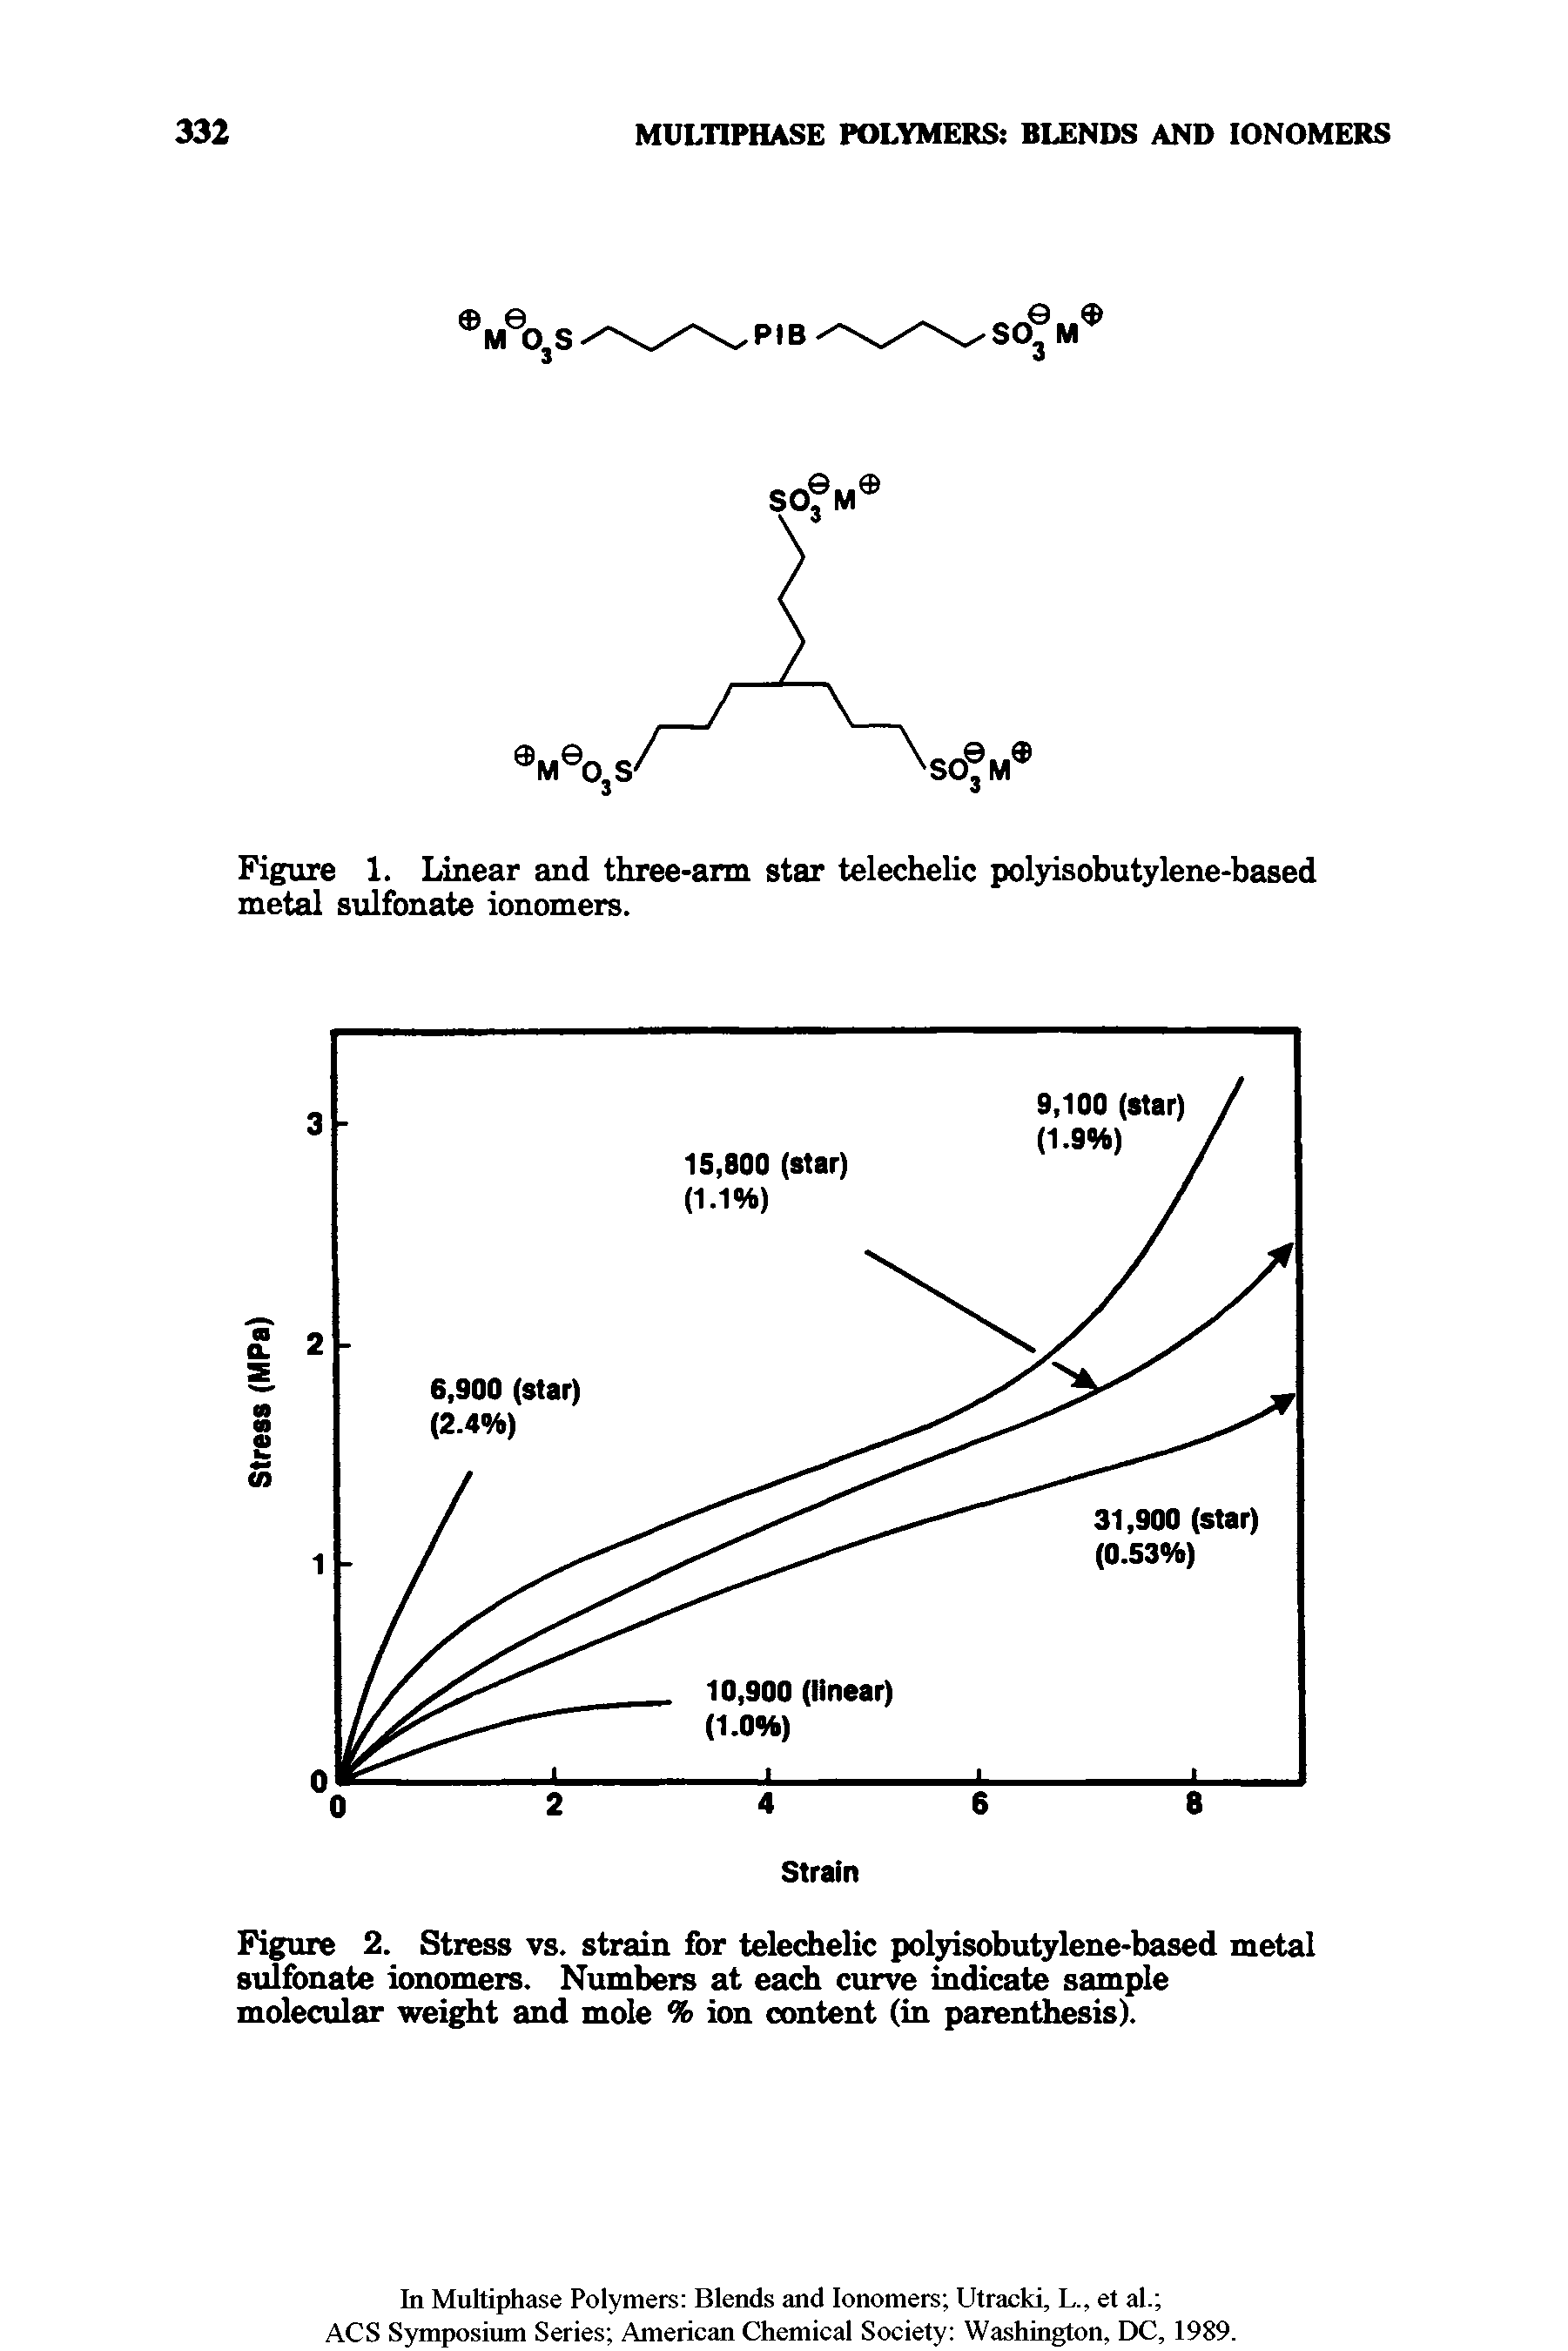 Figure 1. Linear and three-arm star telechelic polyisobutylene-based metal sulfonate ionomers.